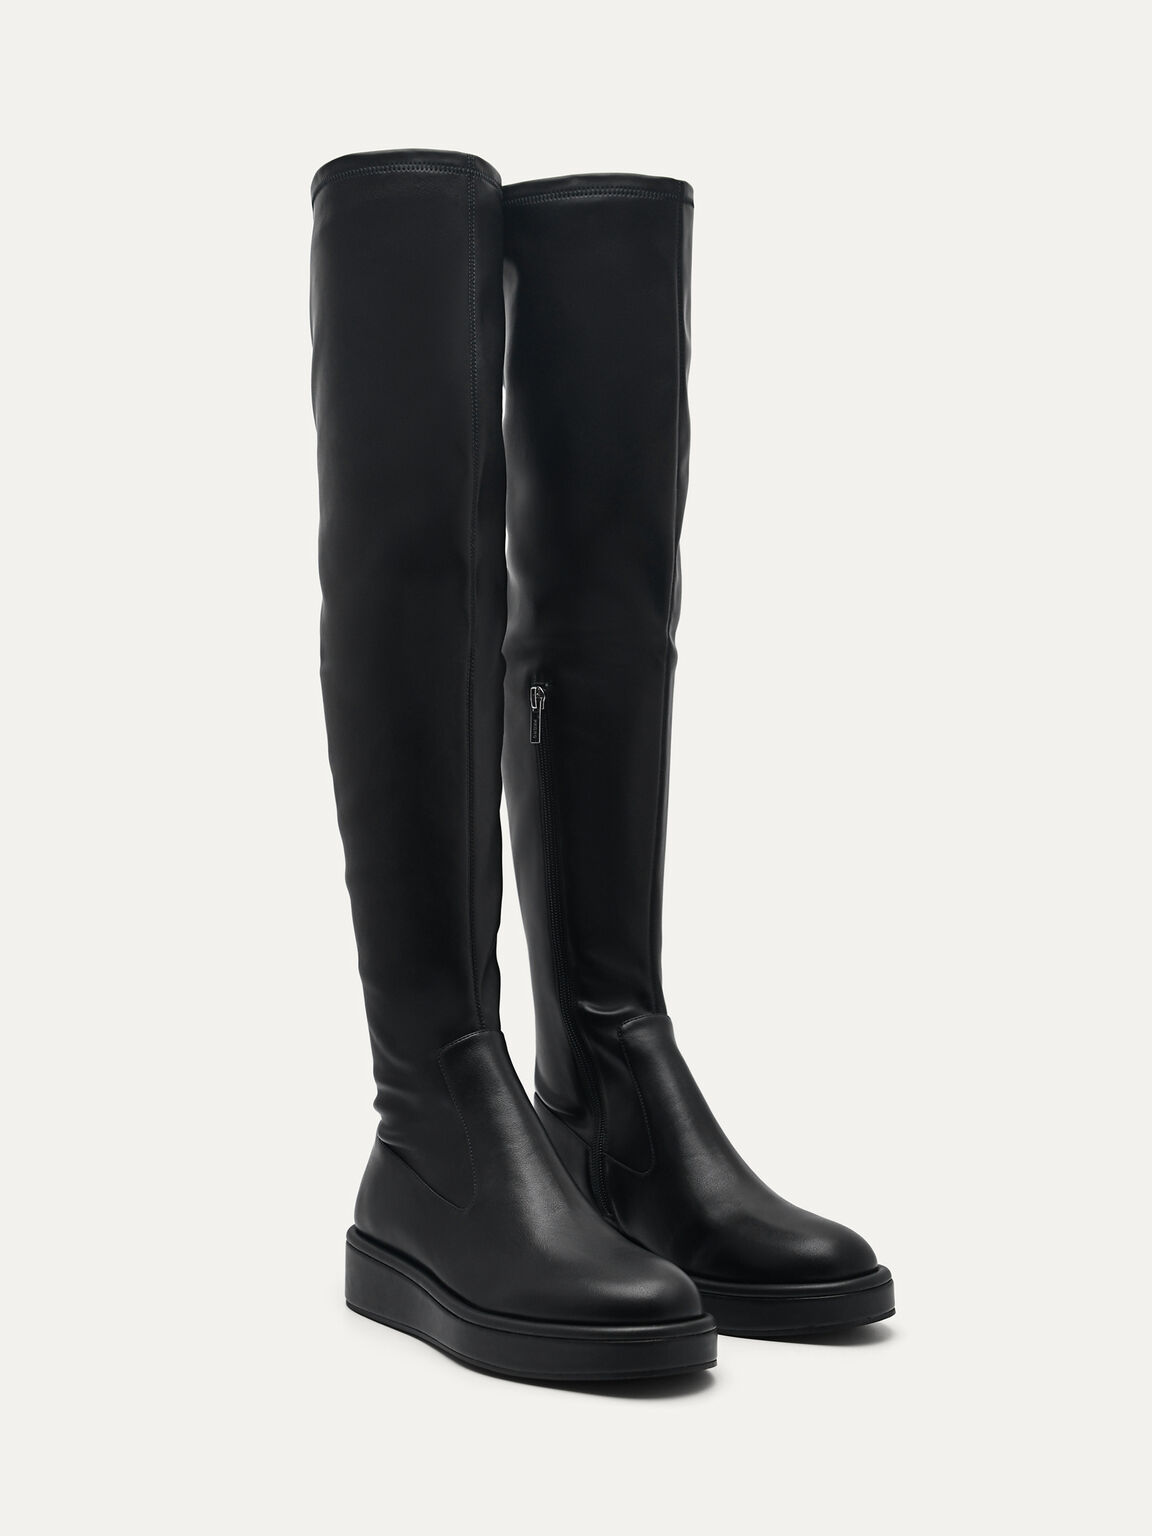 Dessau Knee-High Boots, Black